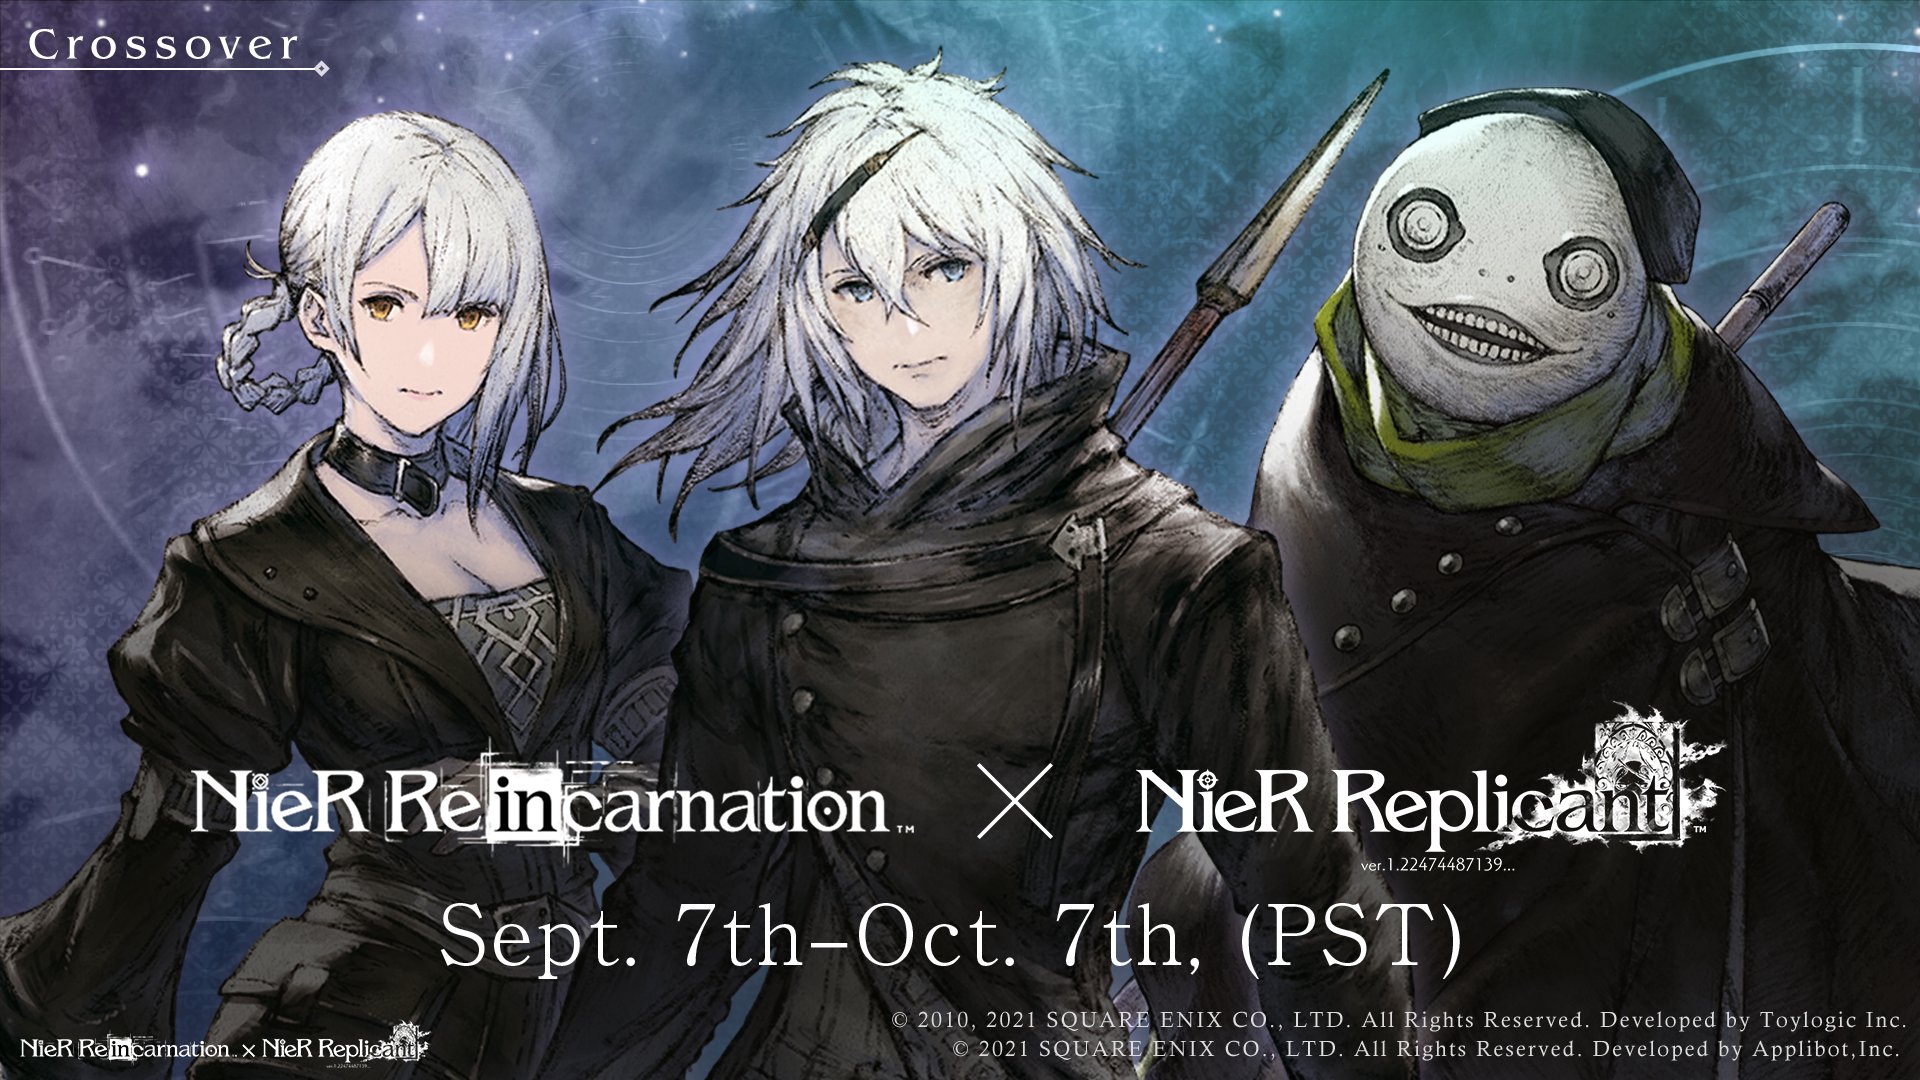 Square Enix Started a NieR Reincarnation & Nier Replicant Crossover Event -  Get2Gaming